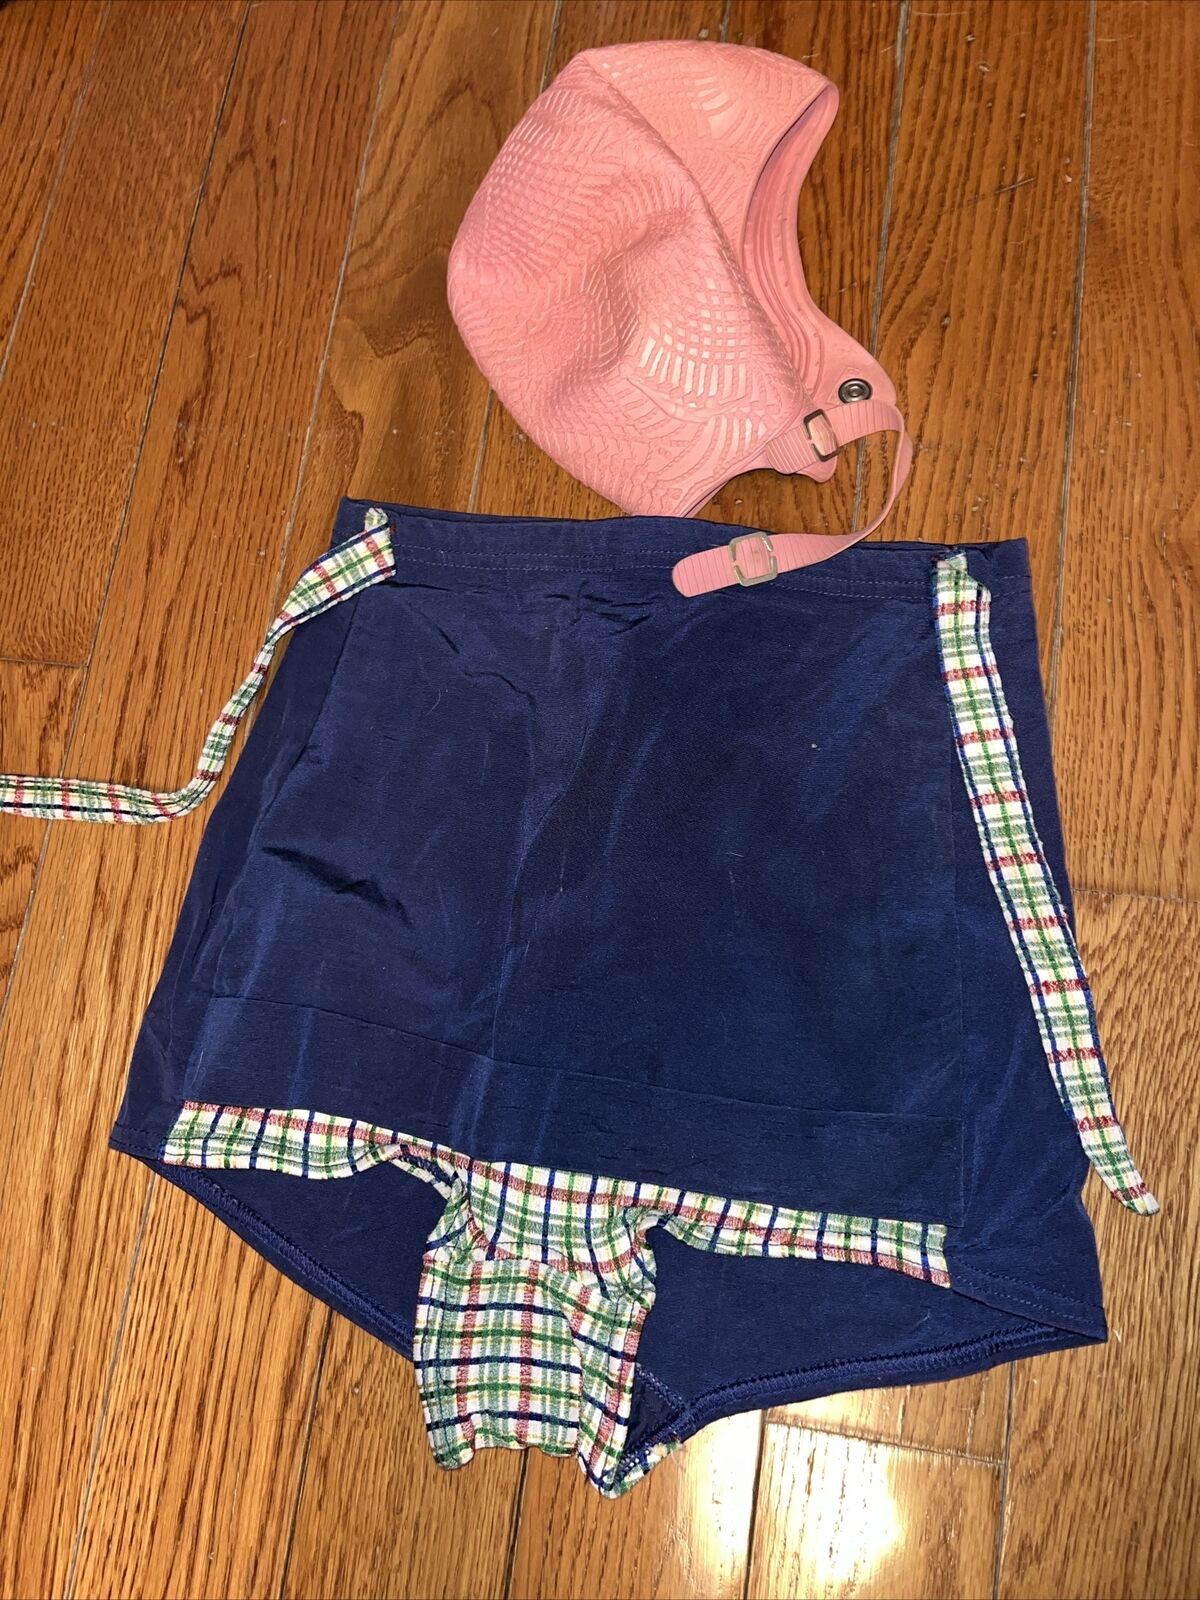 Vintage sea nymph bathing suit and bathing cap